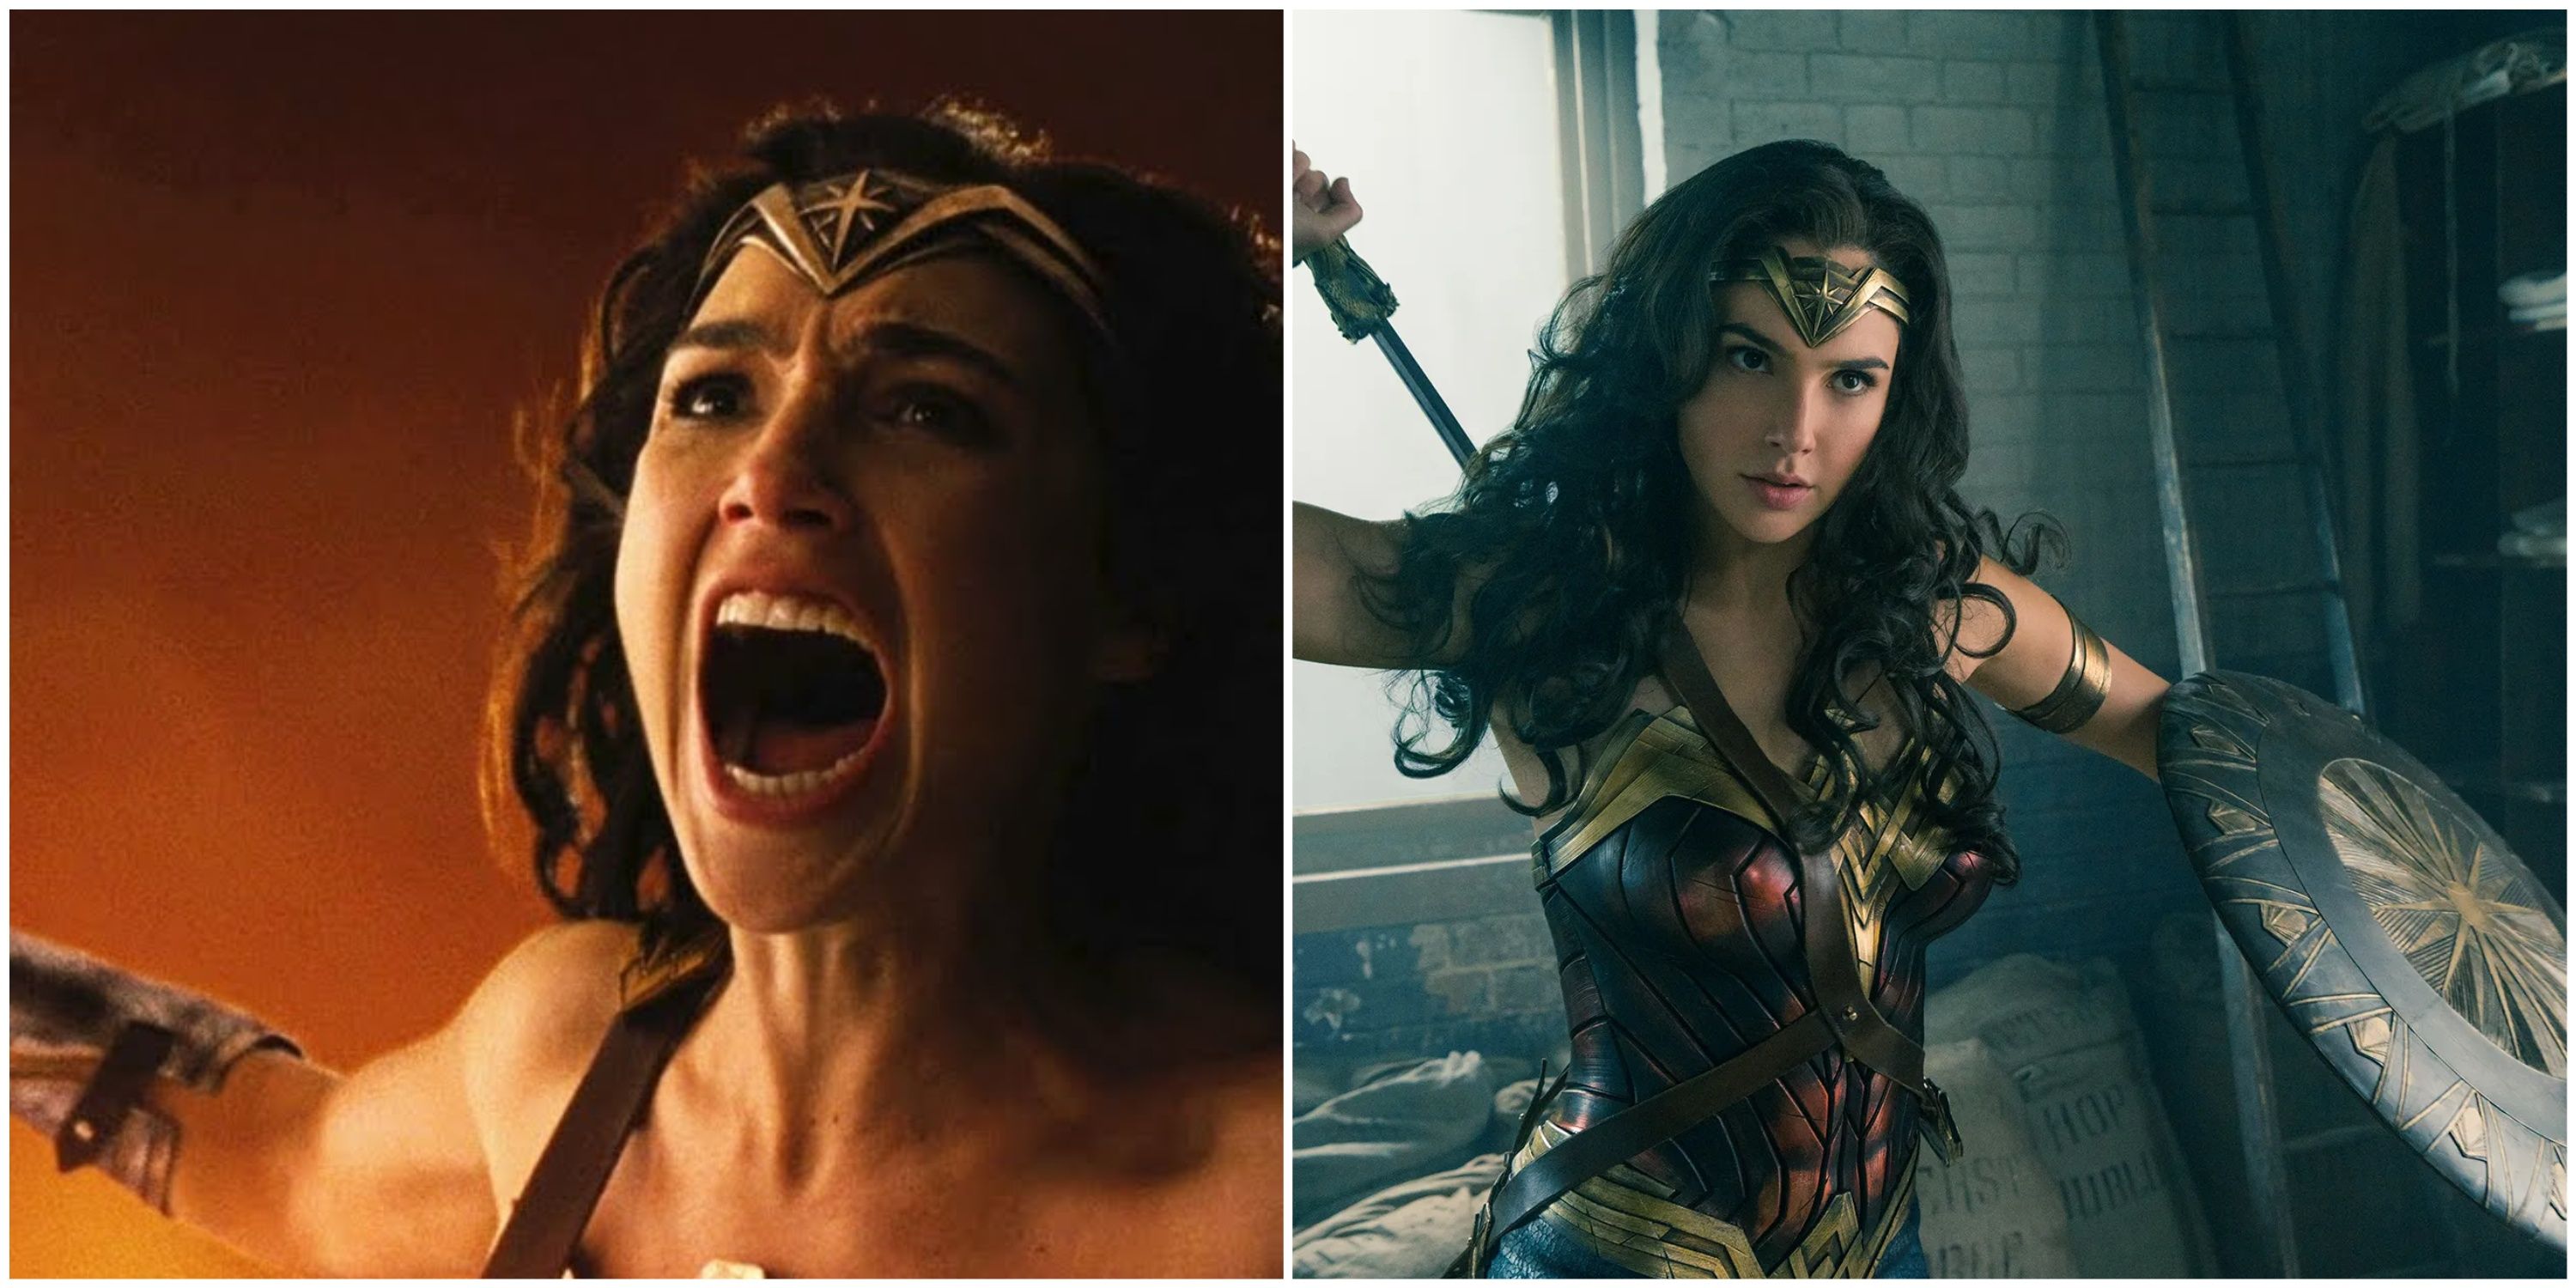 DCEU: Wonder Woman's Weaknesses